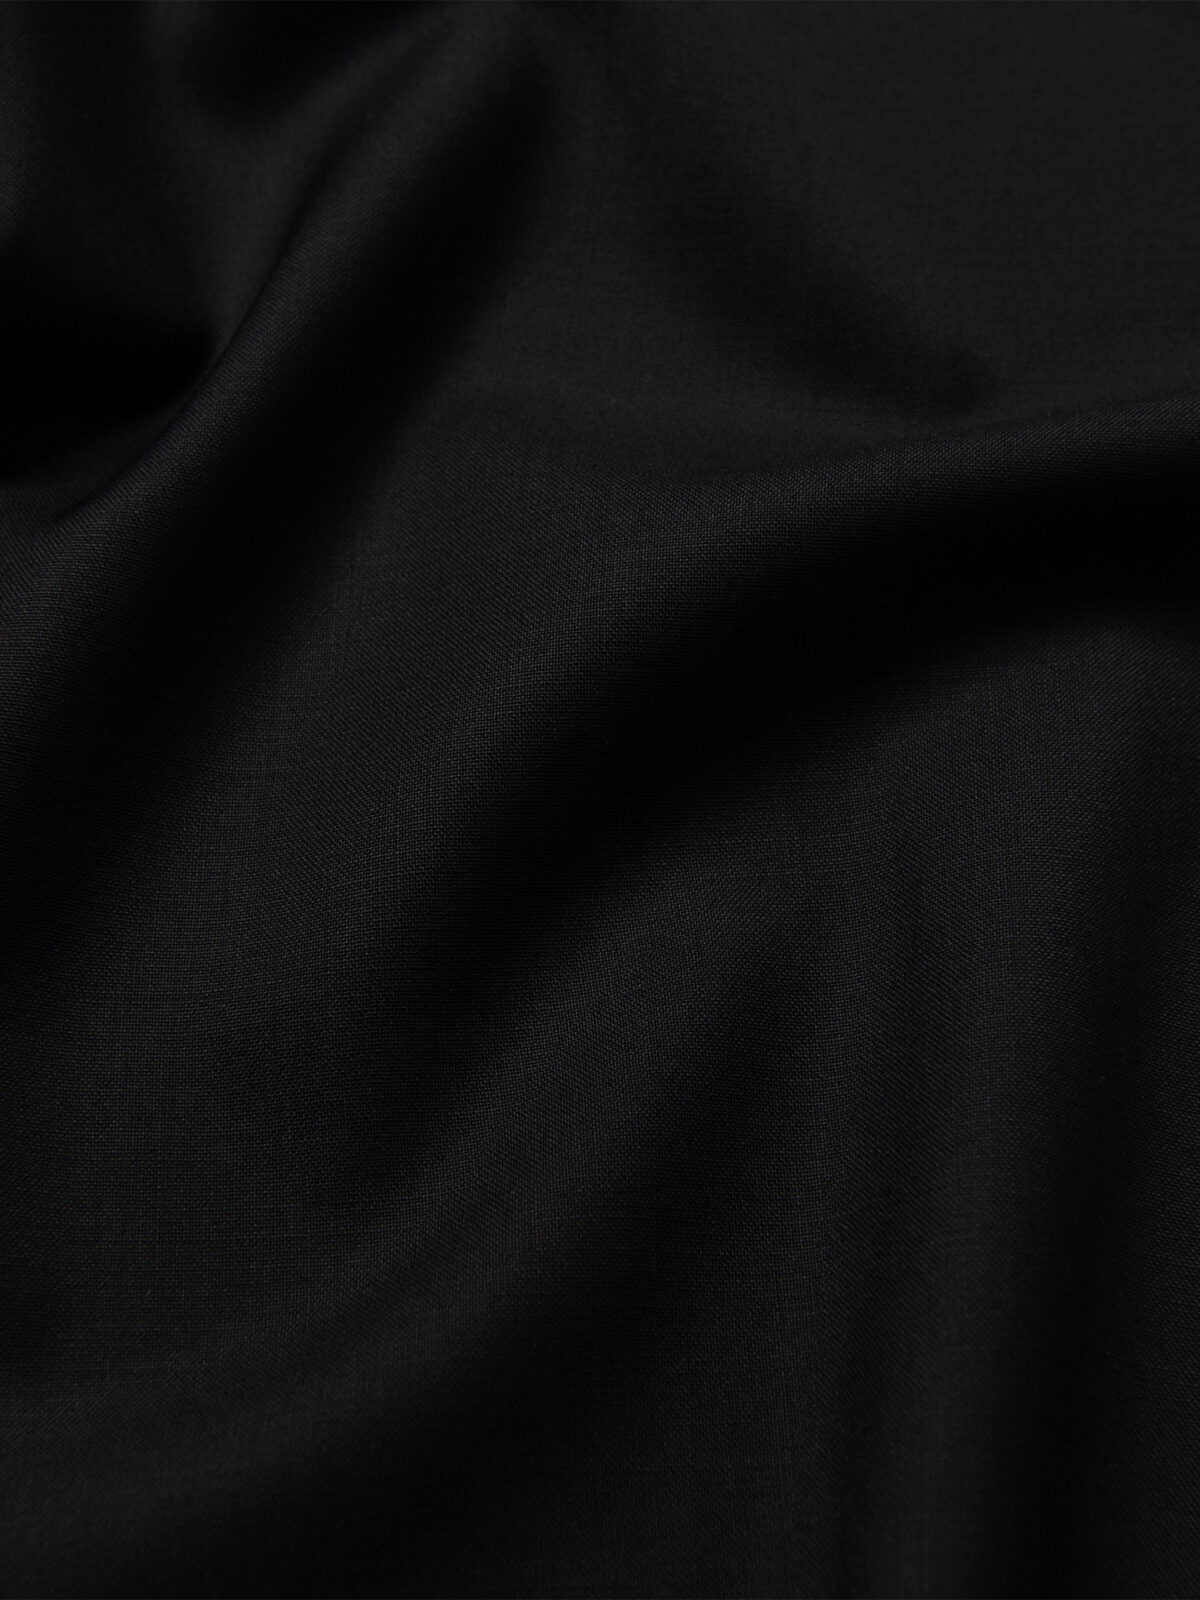 Reda Black Merino Wool Shirts by Proper Cloth